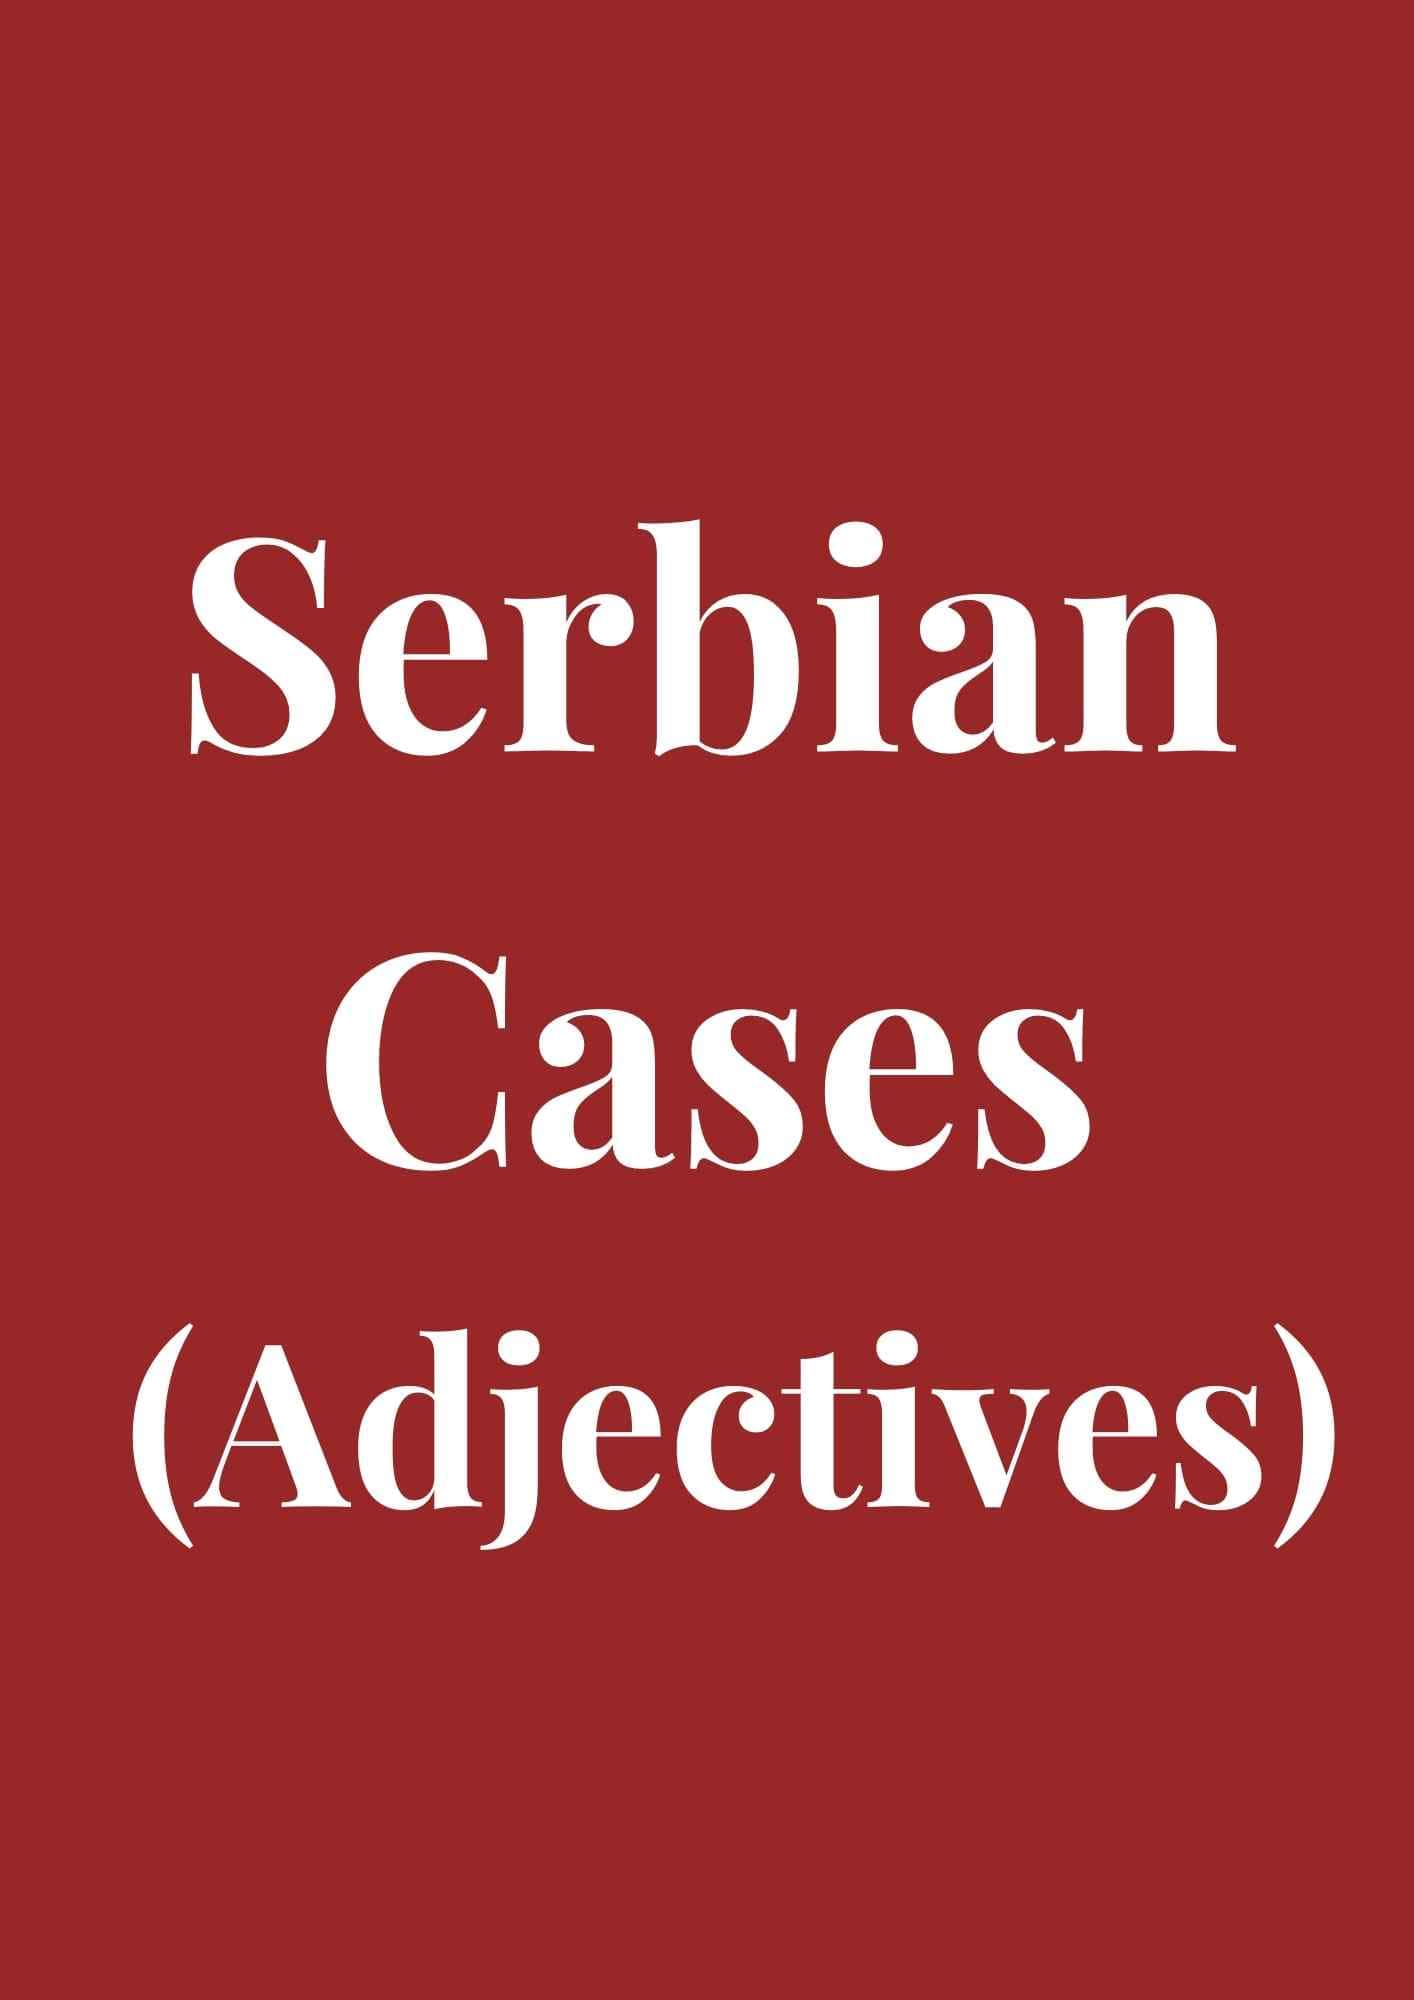 Free Serbian Resources | Belgrade Language School |